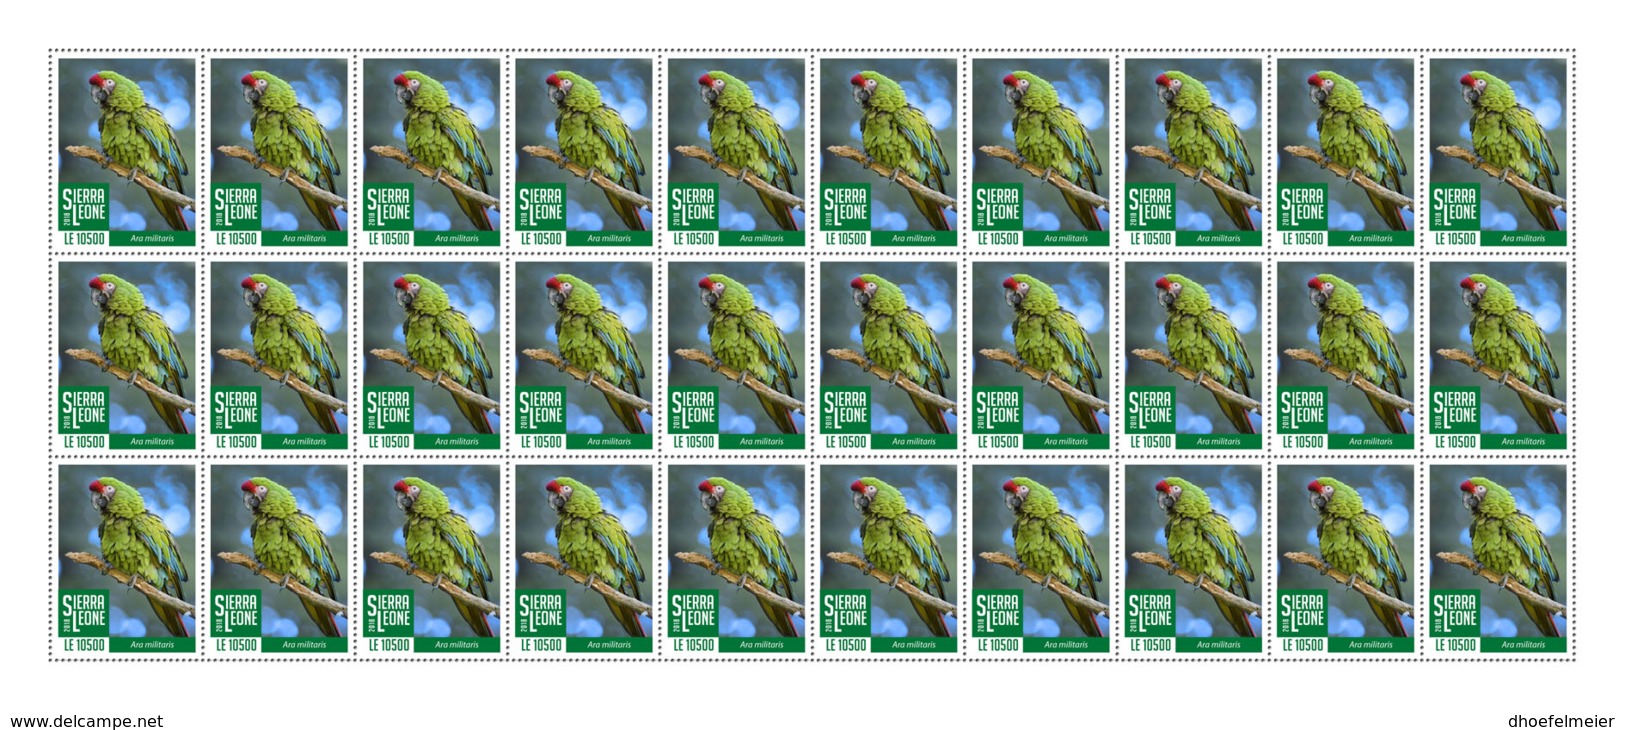 SIERRA LEONE 2018 MNH Green Parrot 30v - OFFICIAL ISSUE - DH1902 - Sierra Leone (1961-...)